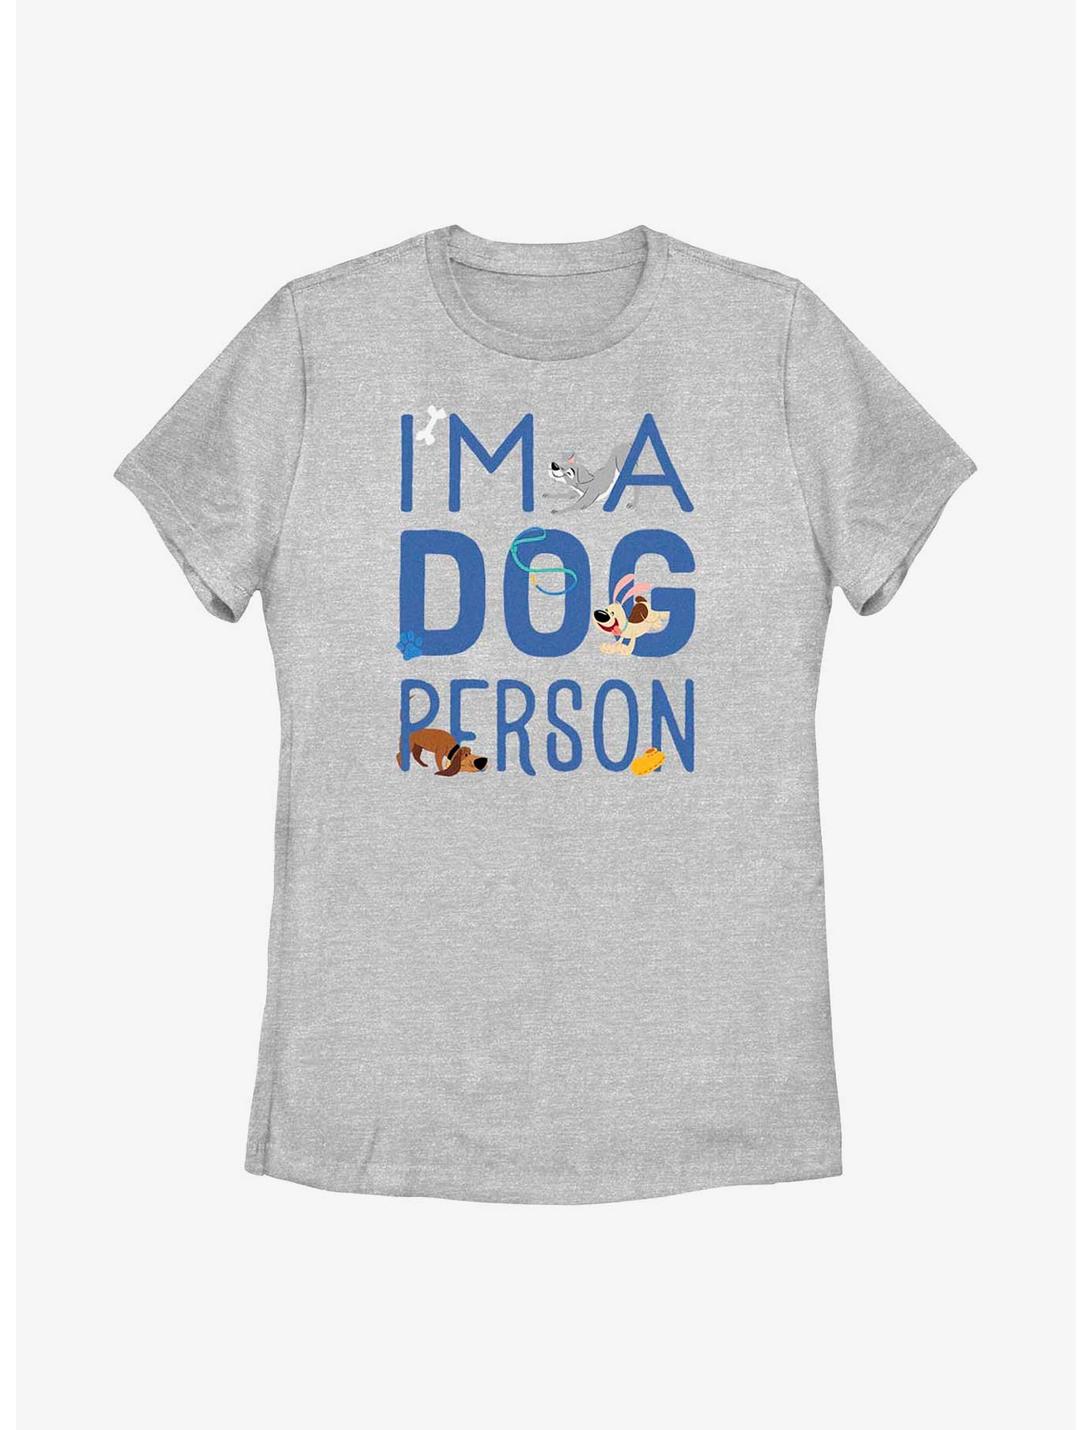 Disney Channel Dog Person Womens T-Shirt, ATH HTR, hi-res